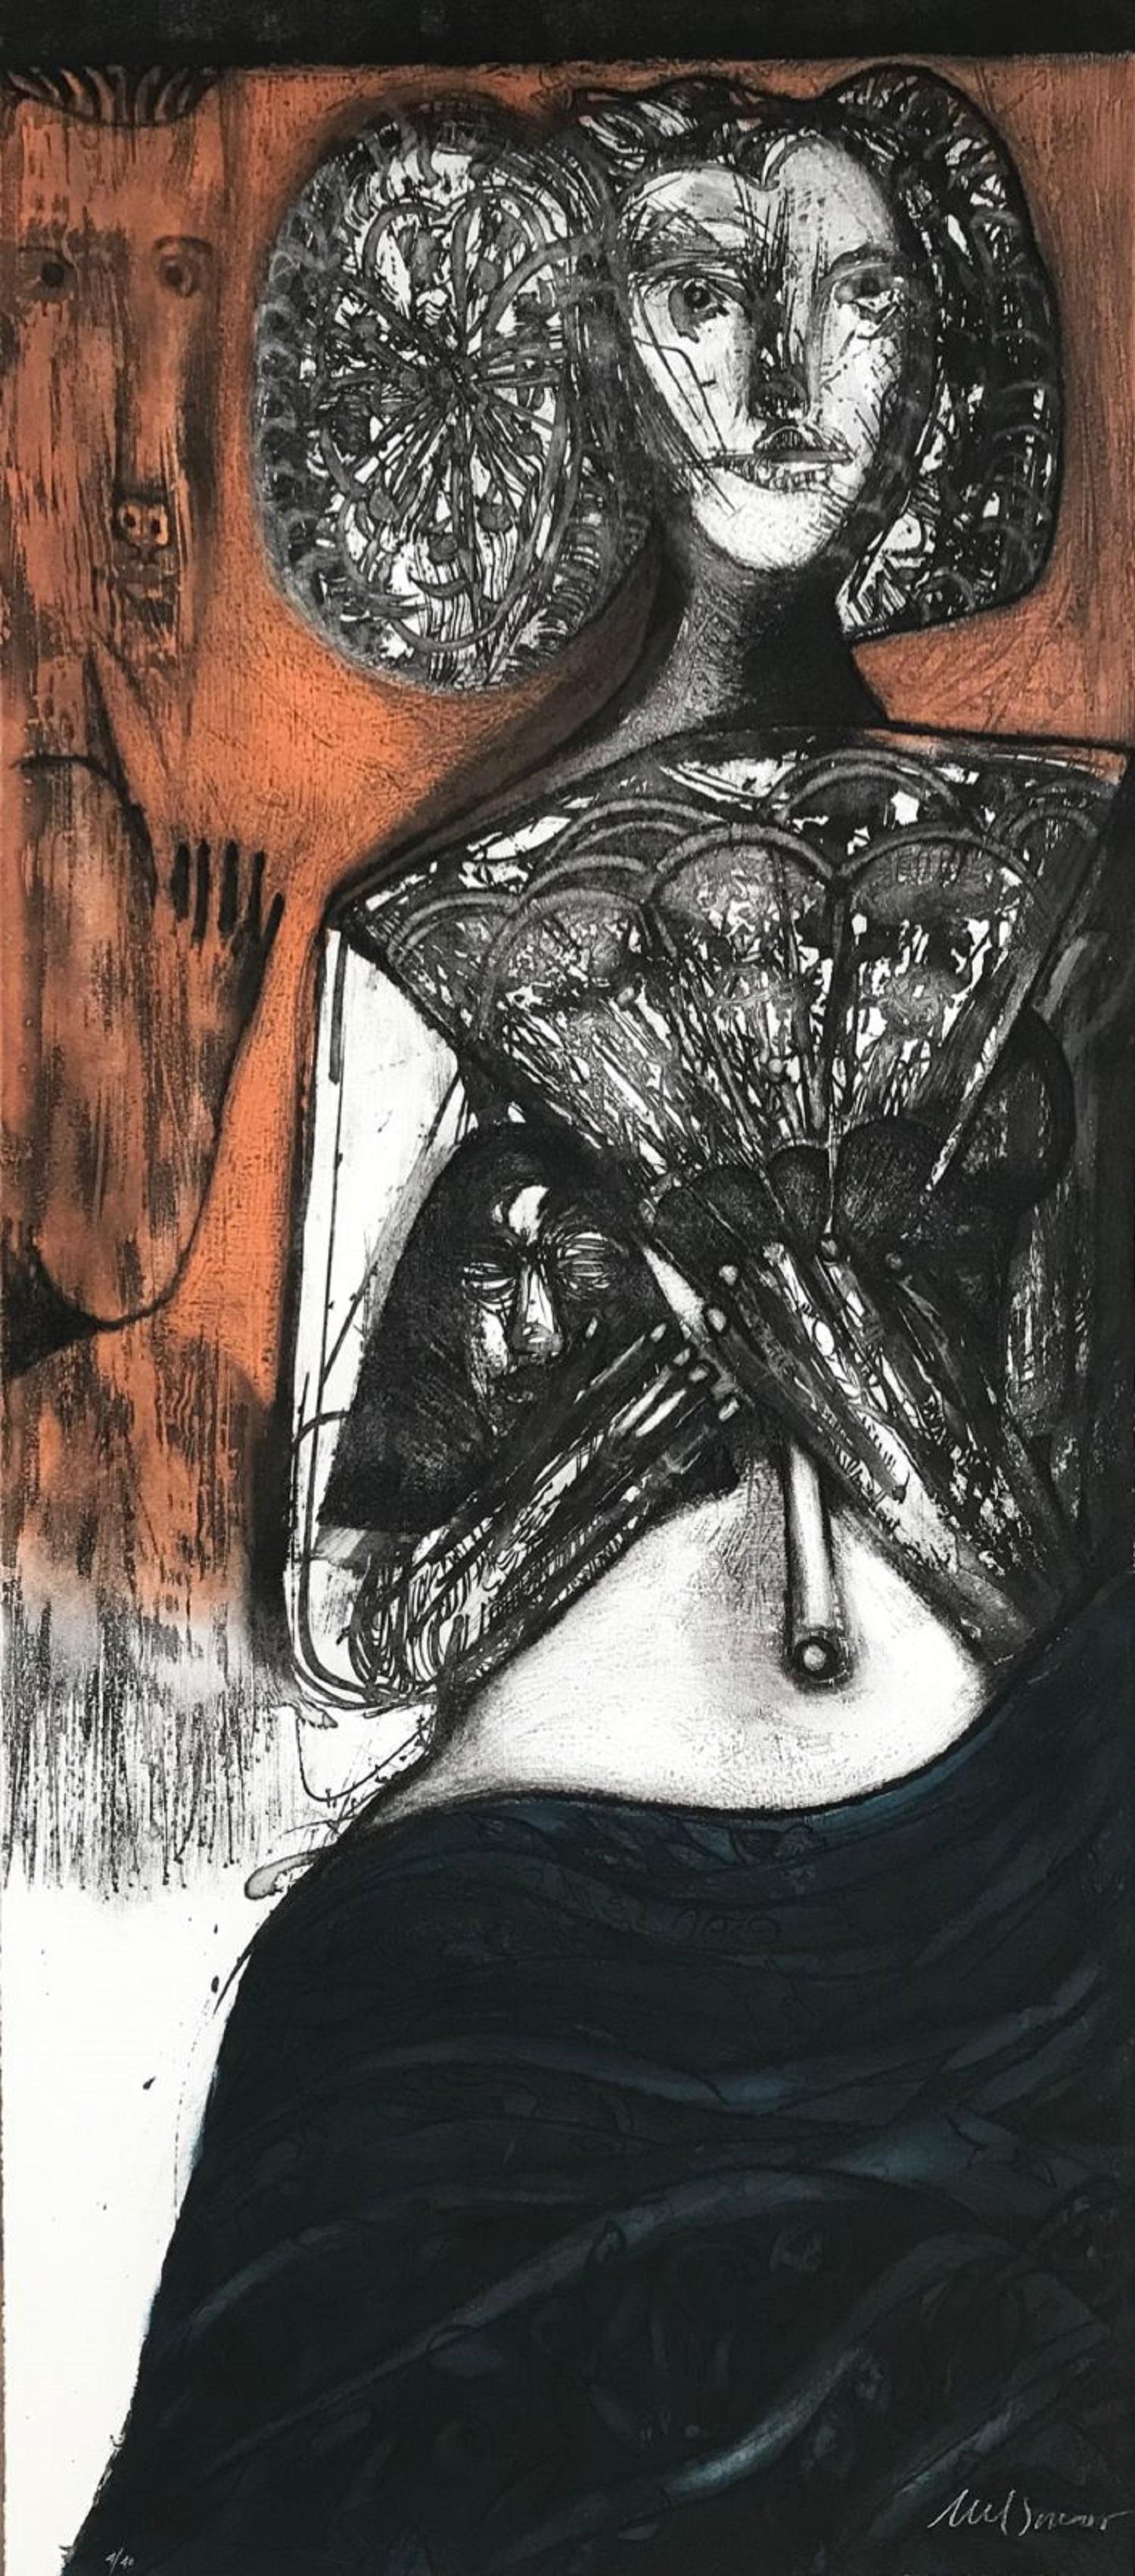 Nelson Dominguez, ¨La dama de Elche¨, 2005, Aquatint, 47.4x20.7 in